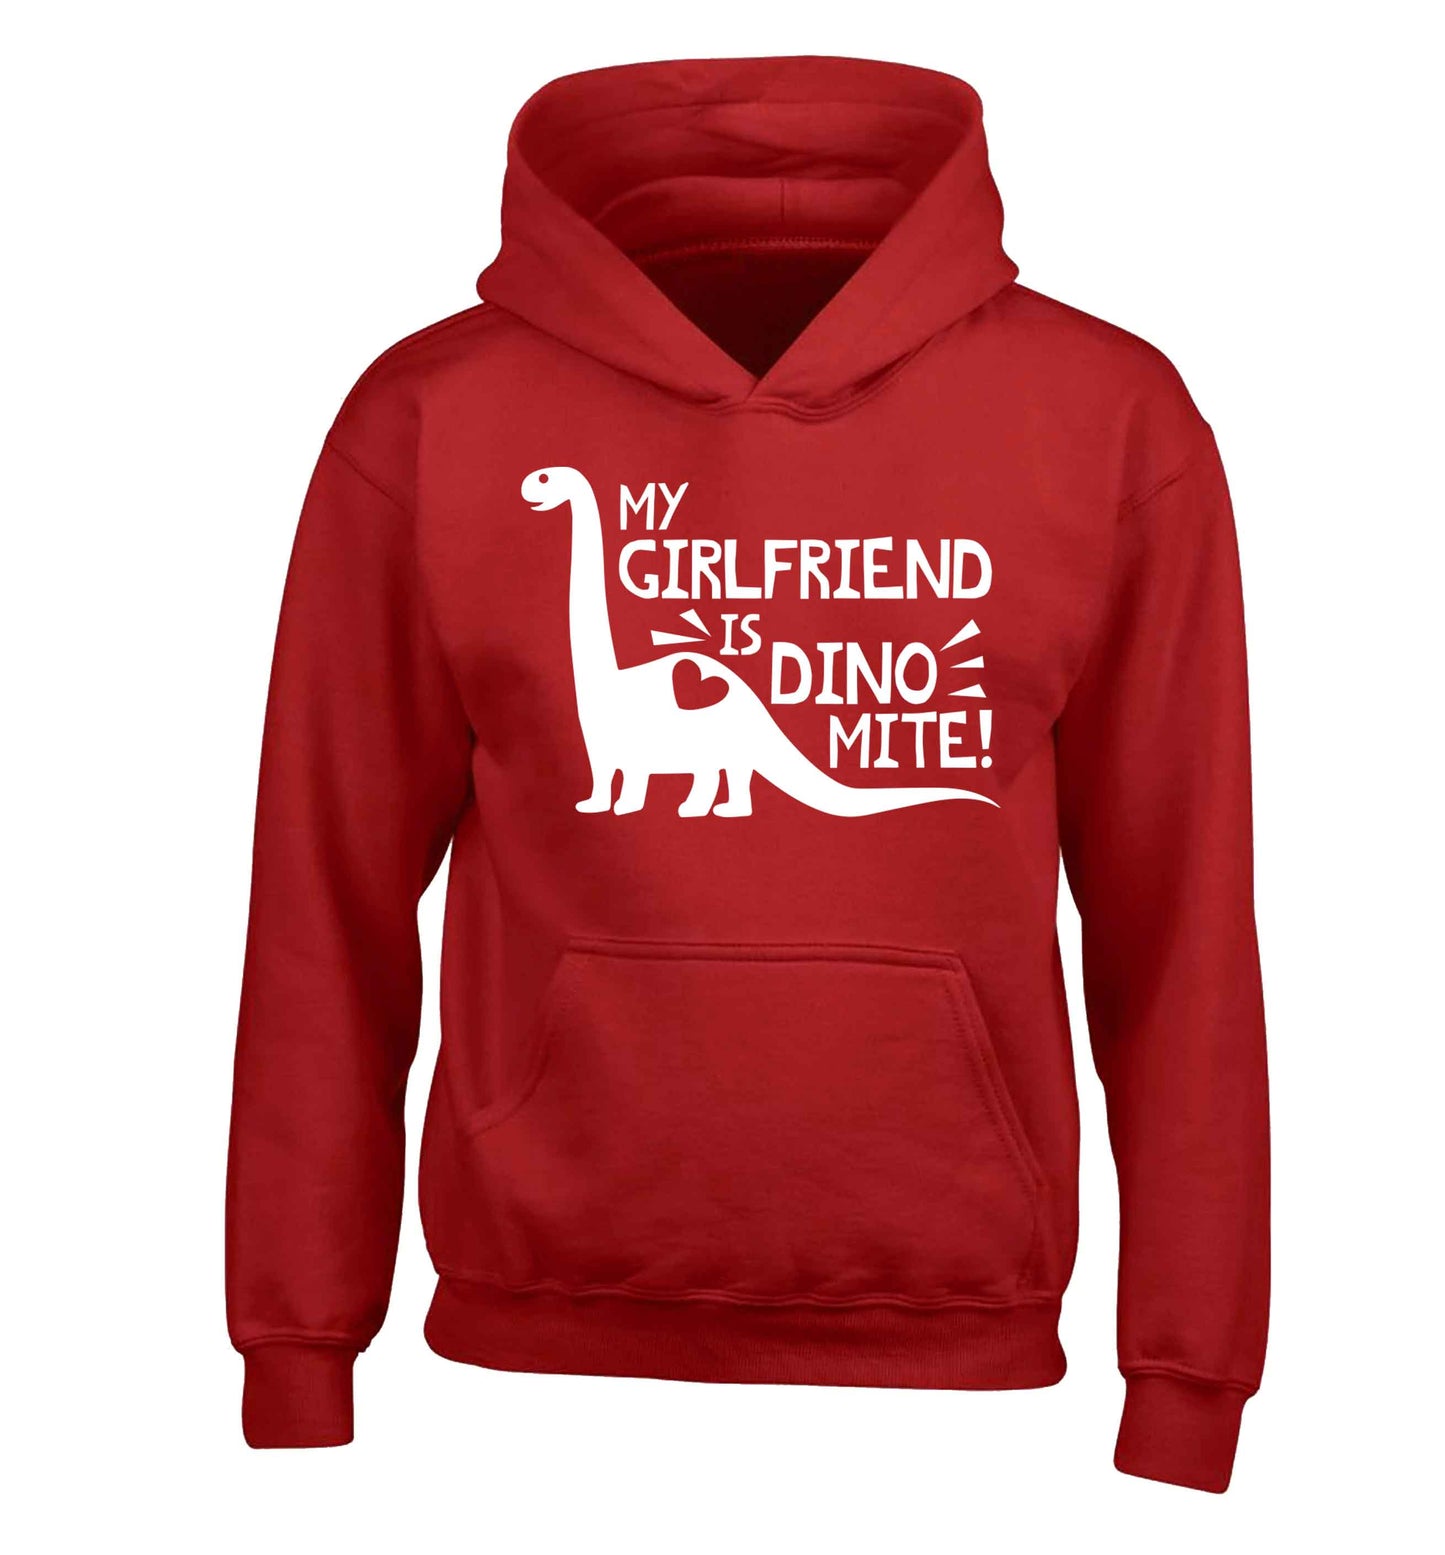 My girlfriend is dinomite! children's red hoodie 12-13 Years